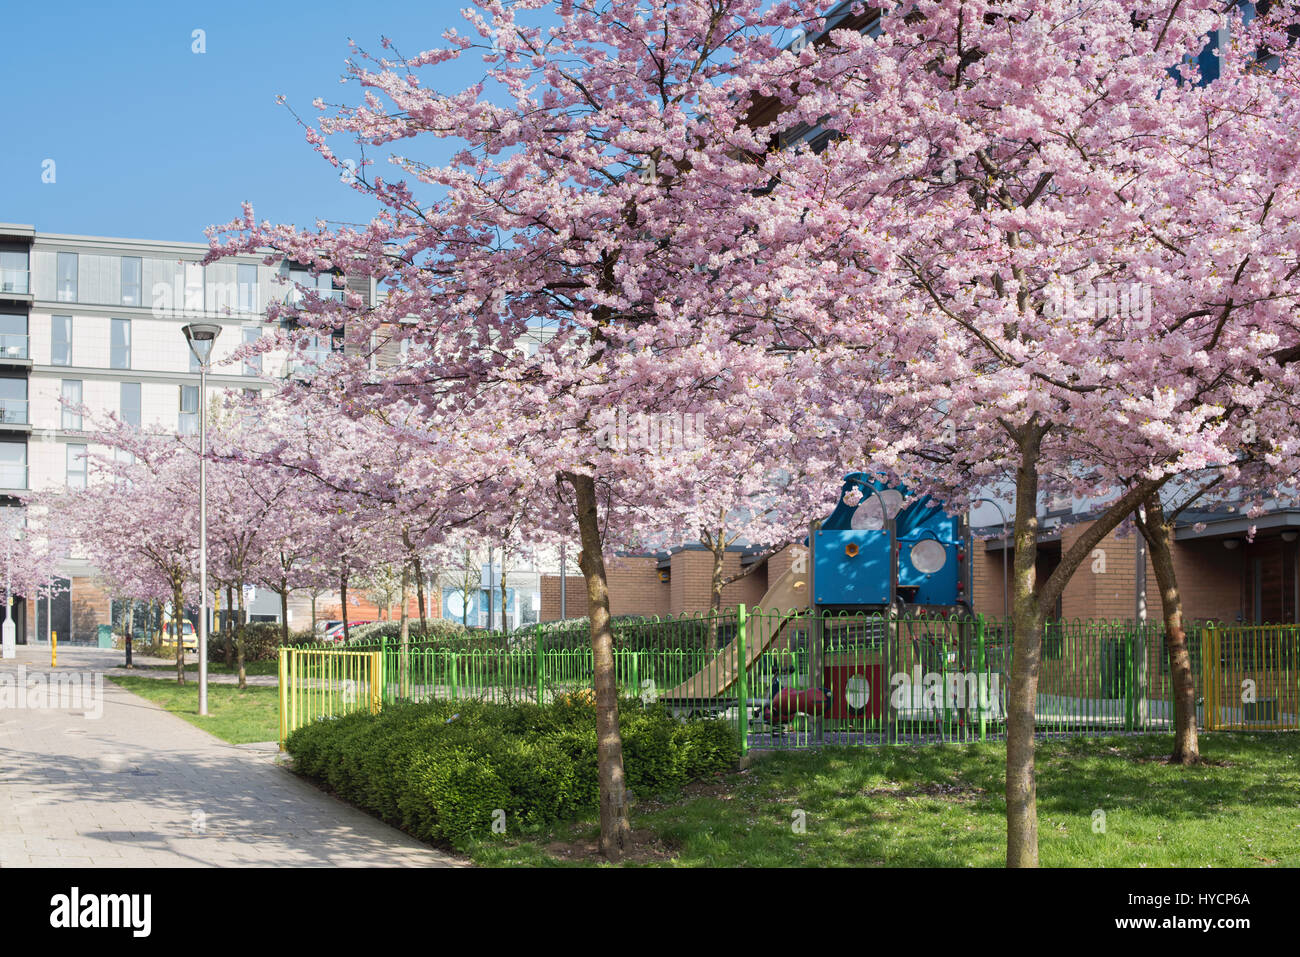 Prunus. Japanese Cherry trees in blossom in late march. Petersfield Green, Milton Keynes, Buckinghamshire, England Stock Photo